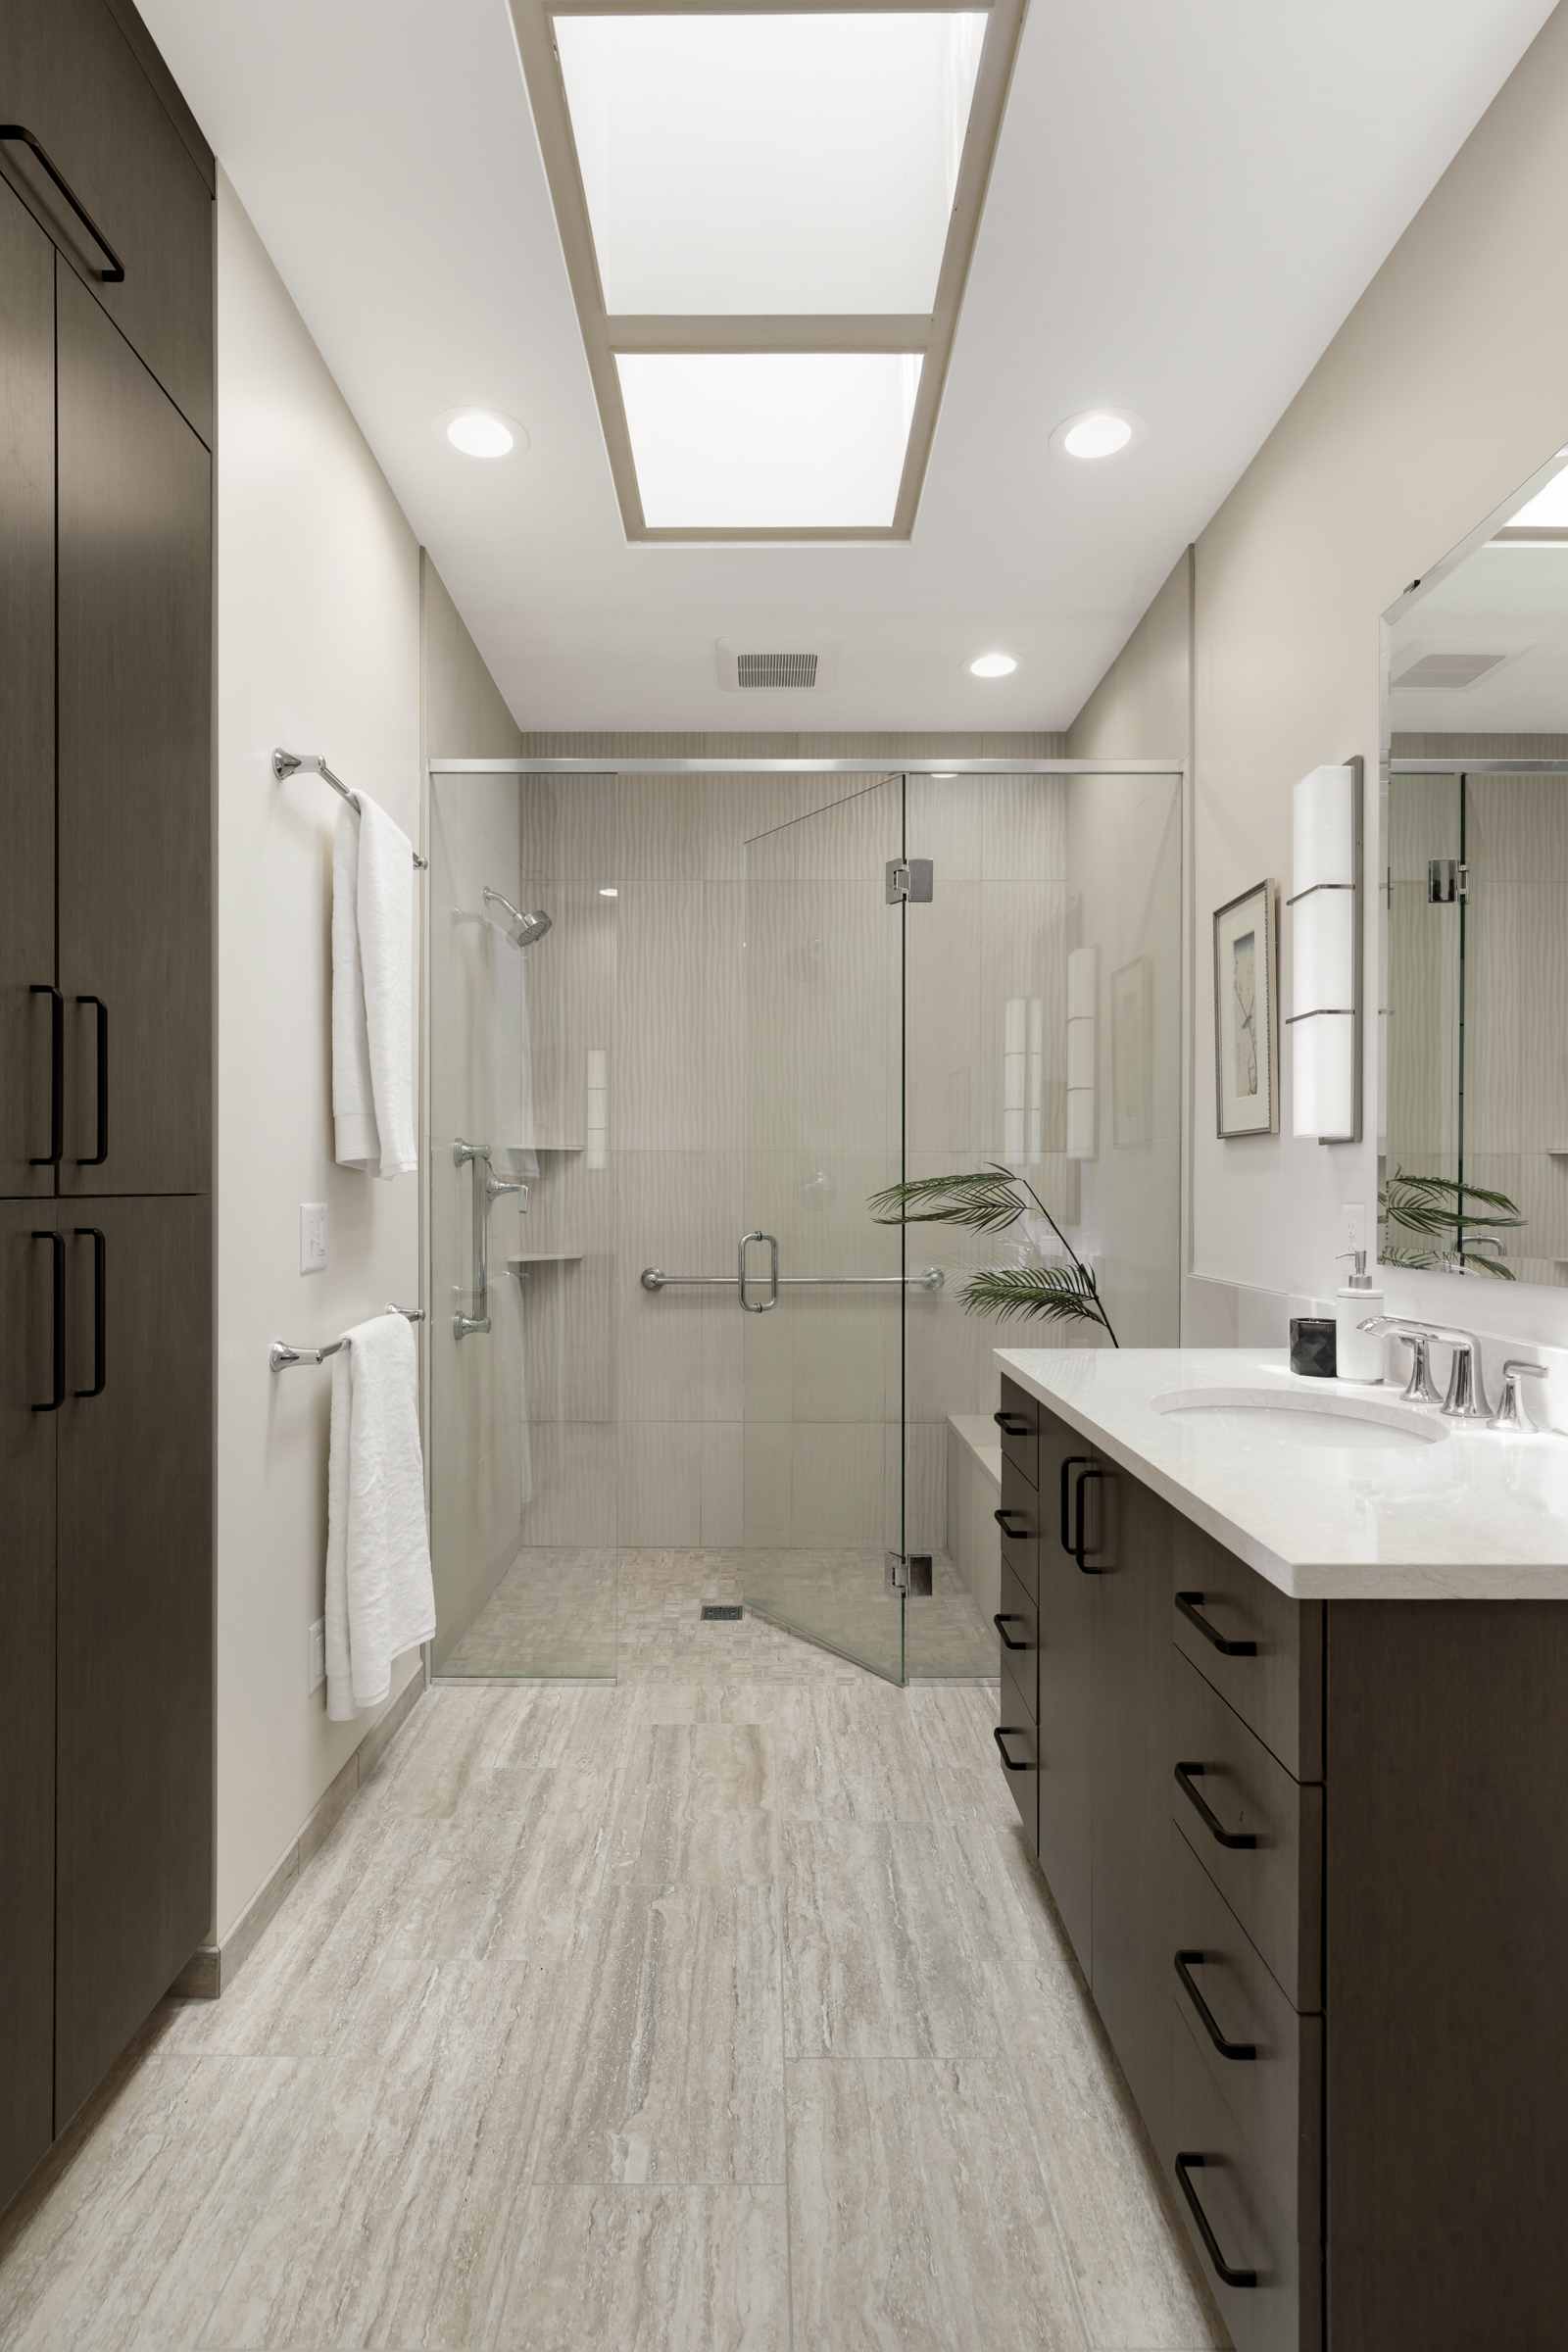 Bathroom remodel with skylights, walk-in glass enclosed shower, and dark wood vanity